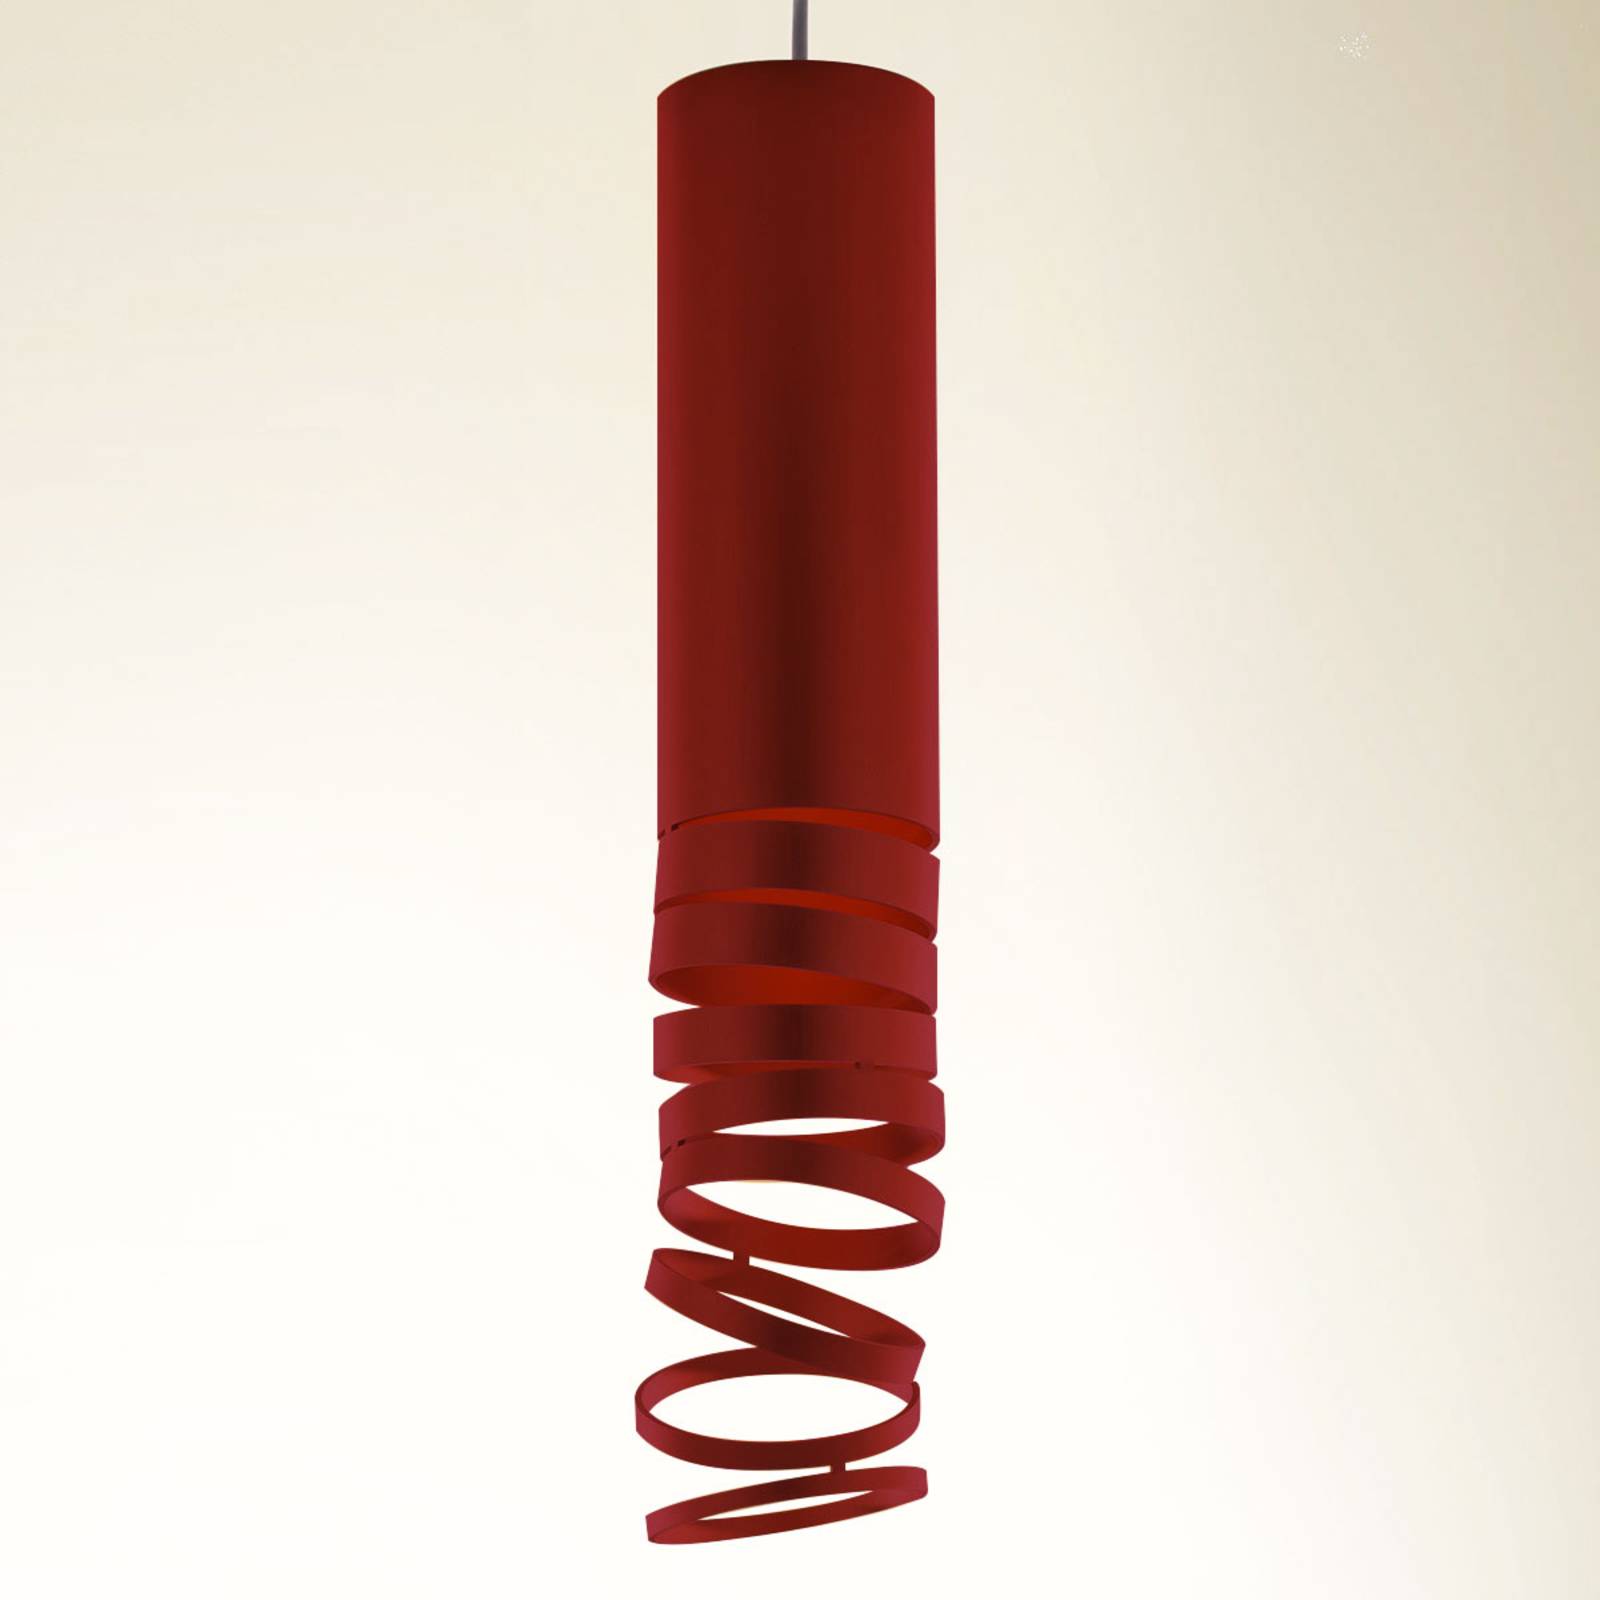 Artemide decomposé függő lámpa piros